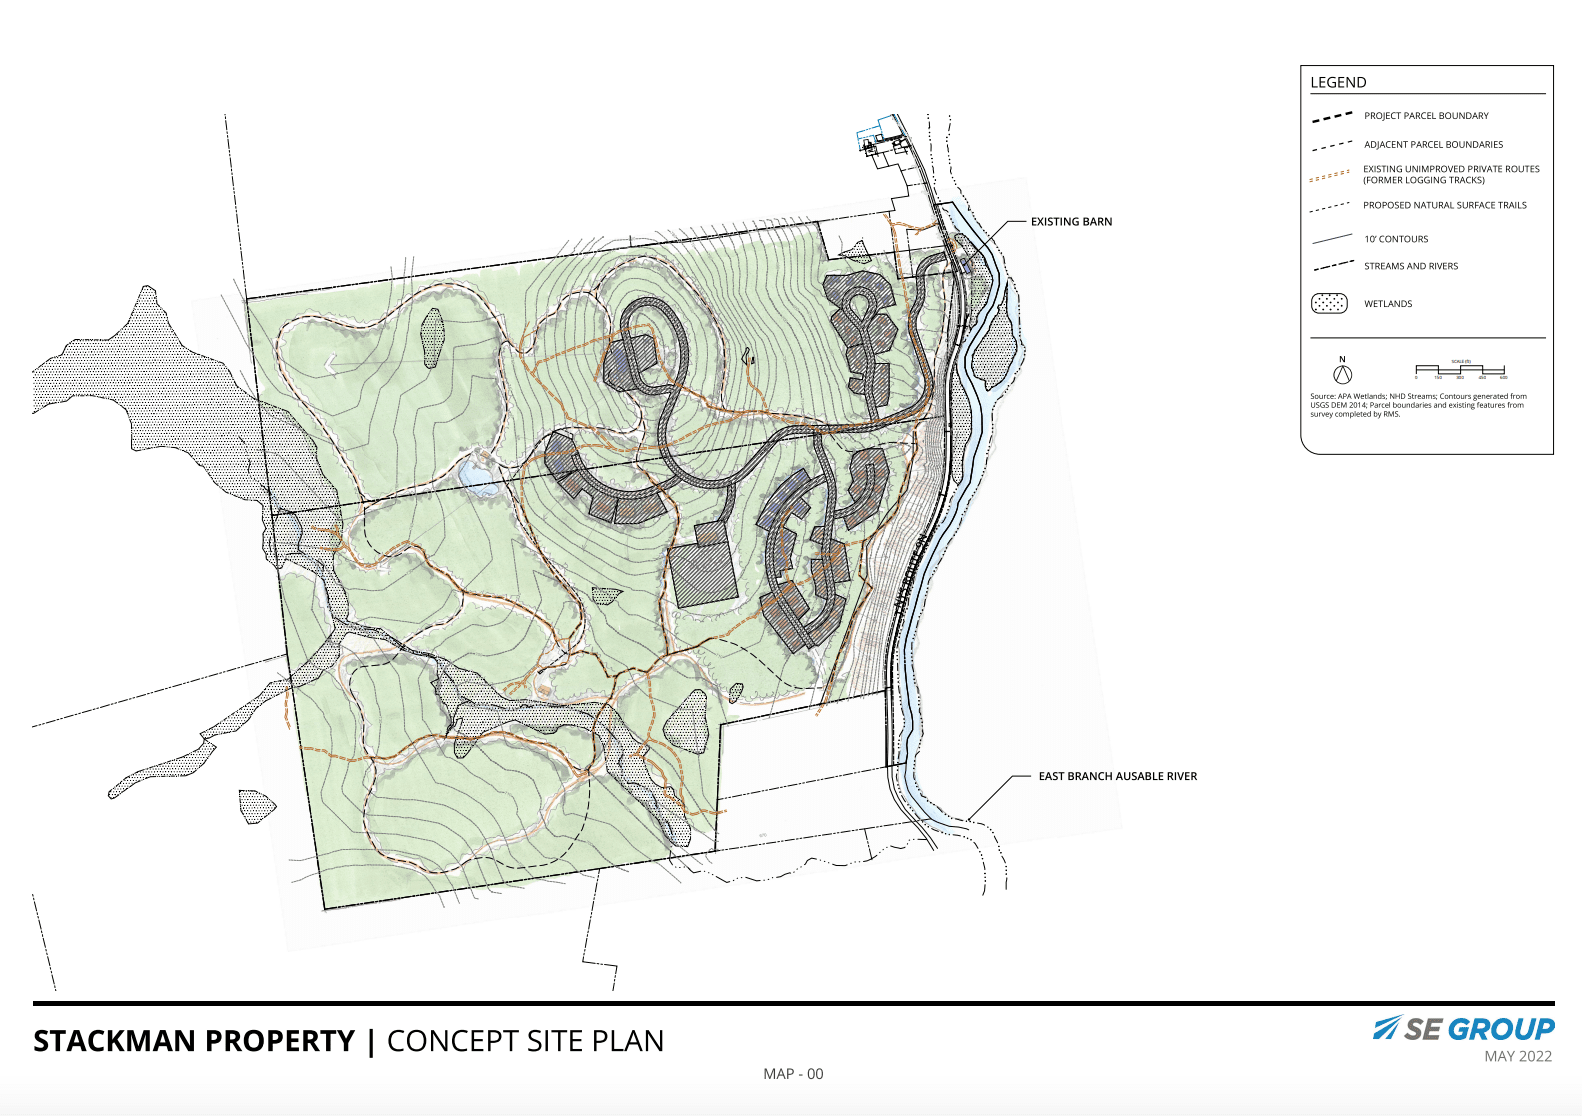 Jay resort subdivision map courtesy of APA